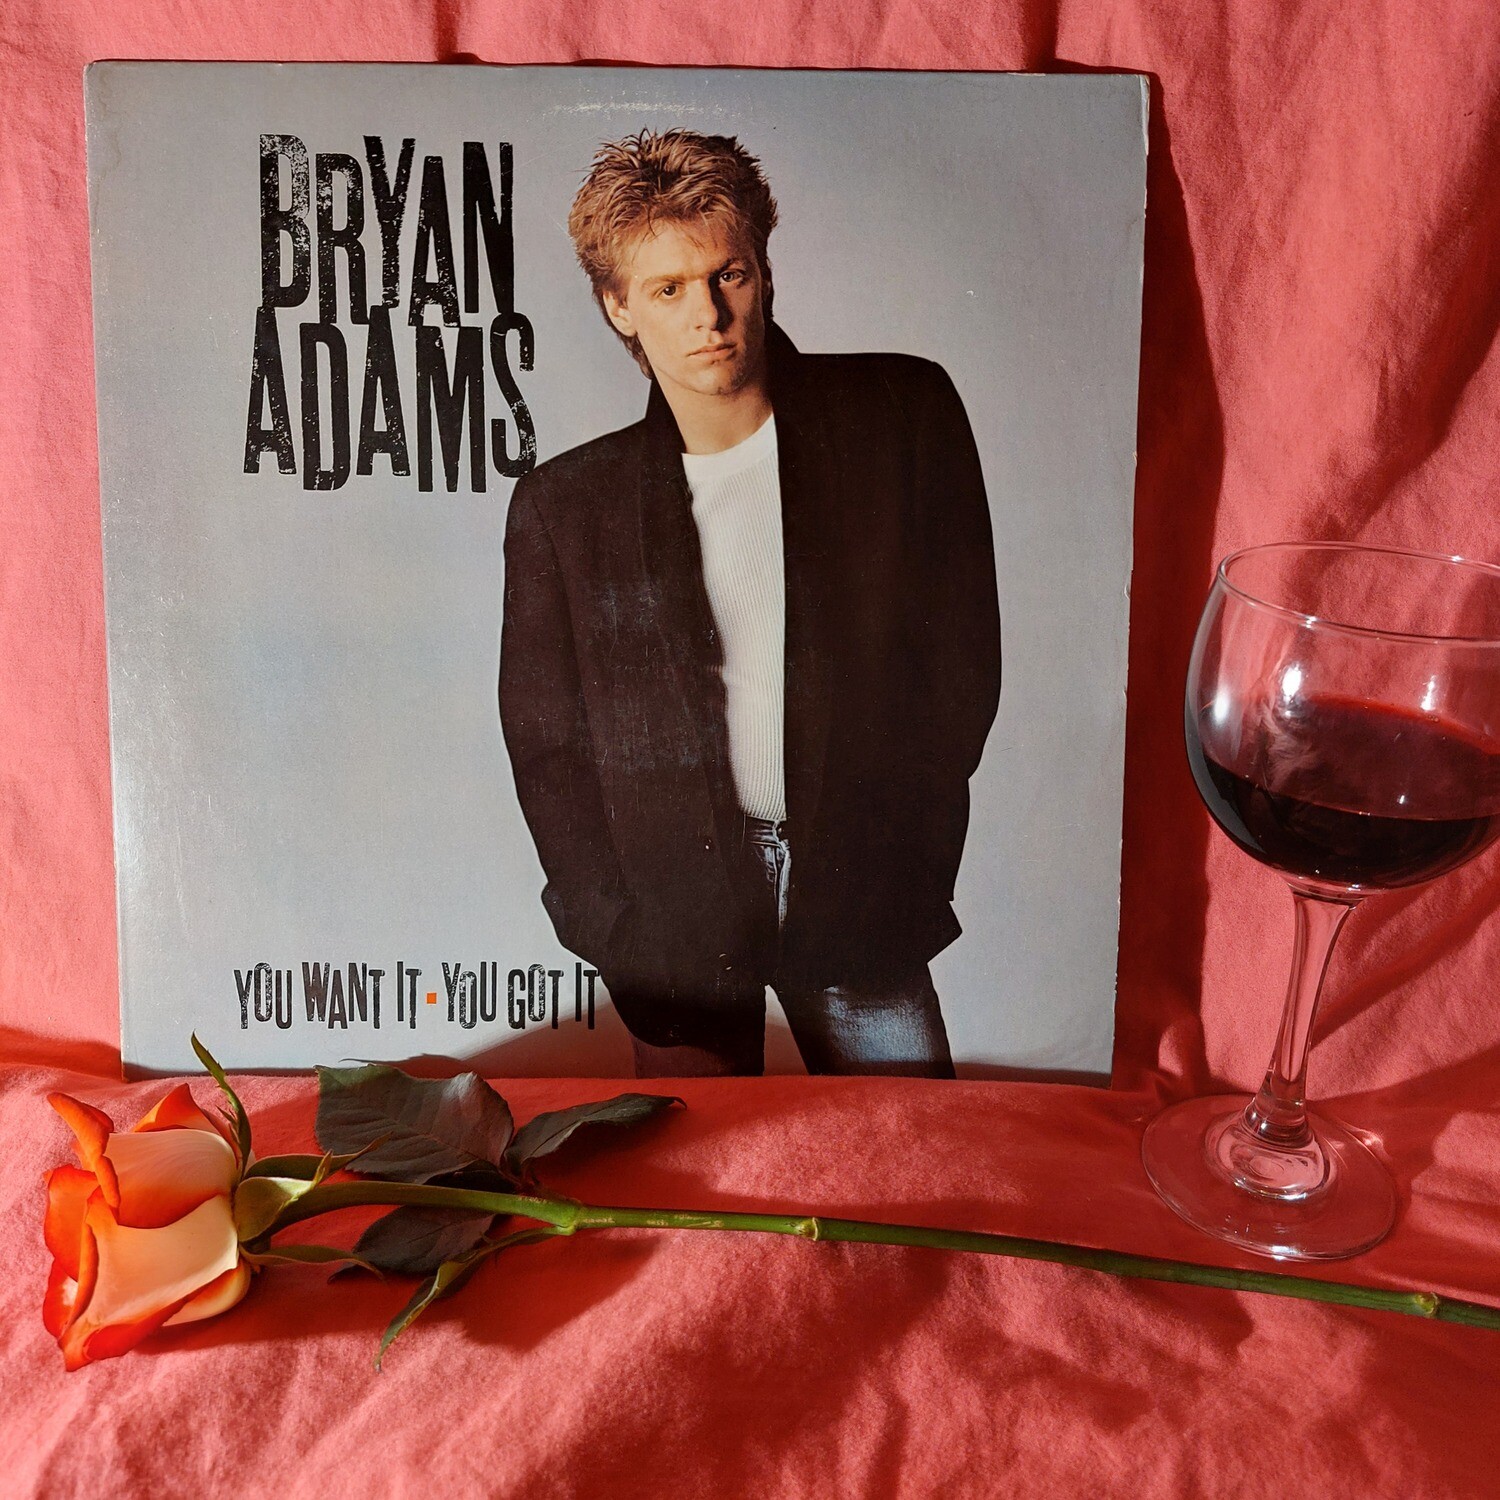 Bryan Adams - You Want it, You Got it (1981)